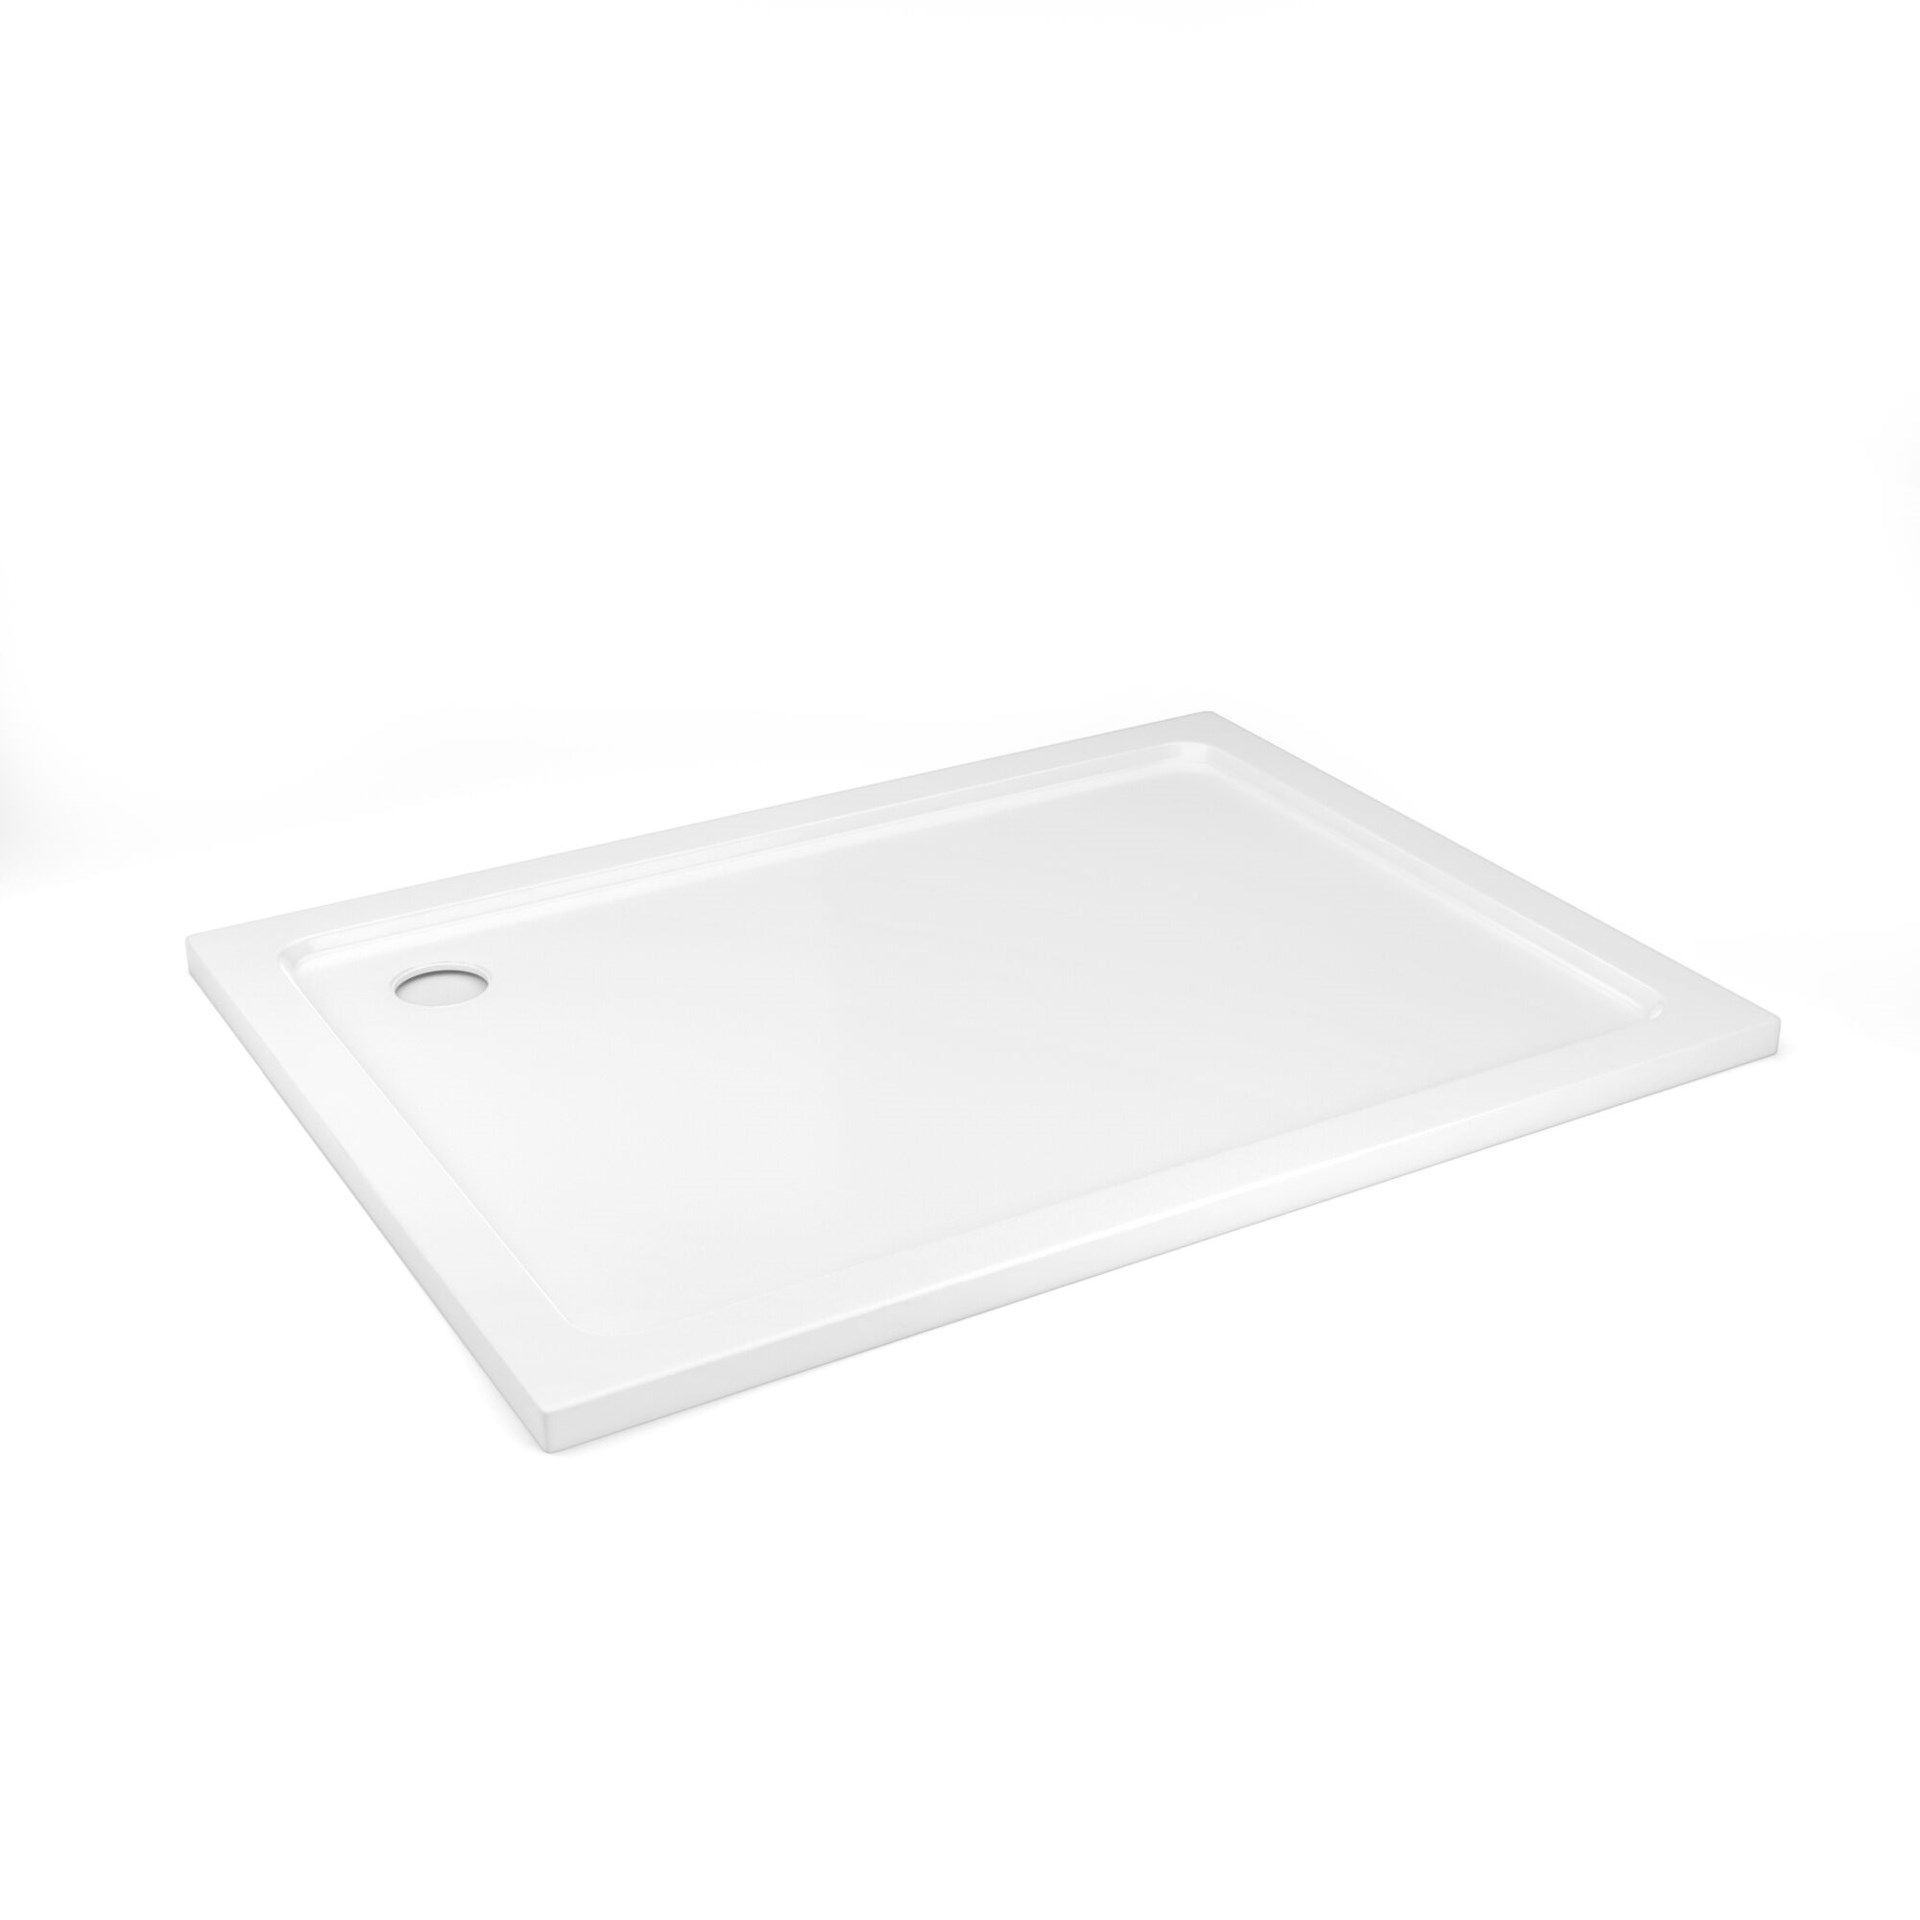 (SUP30) New 1200x900mm Rectangular Ultra Slim Stone Shower Tray.Low profile ultra slim design Gel - Image 2 of 2